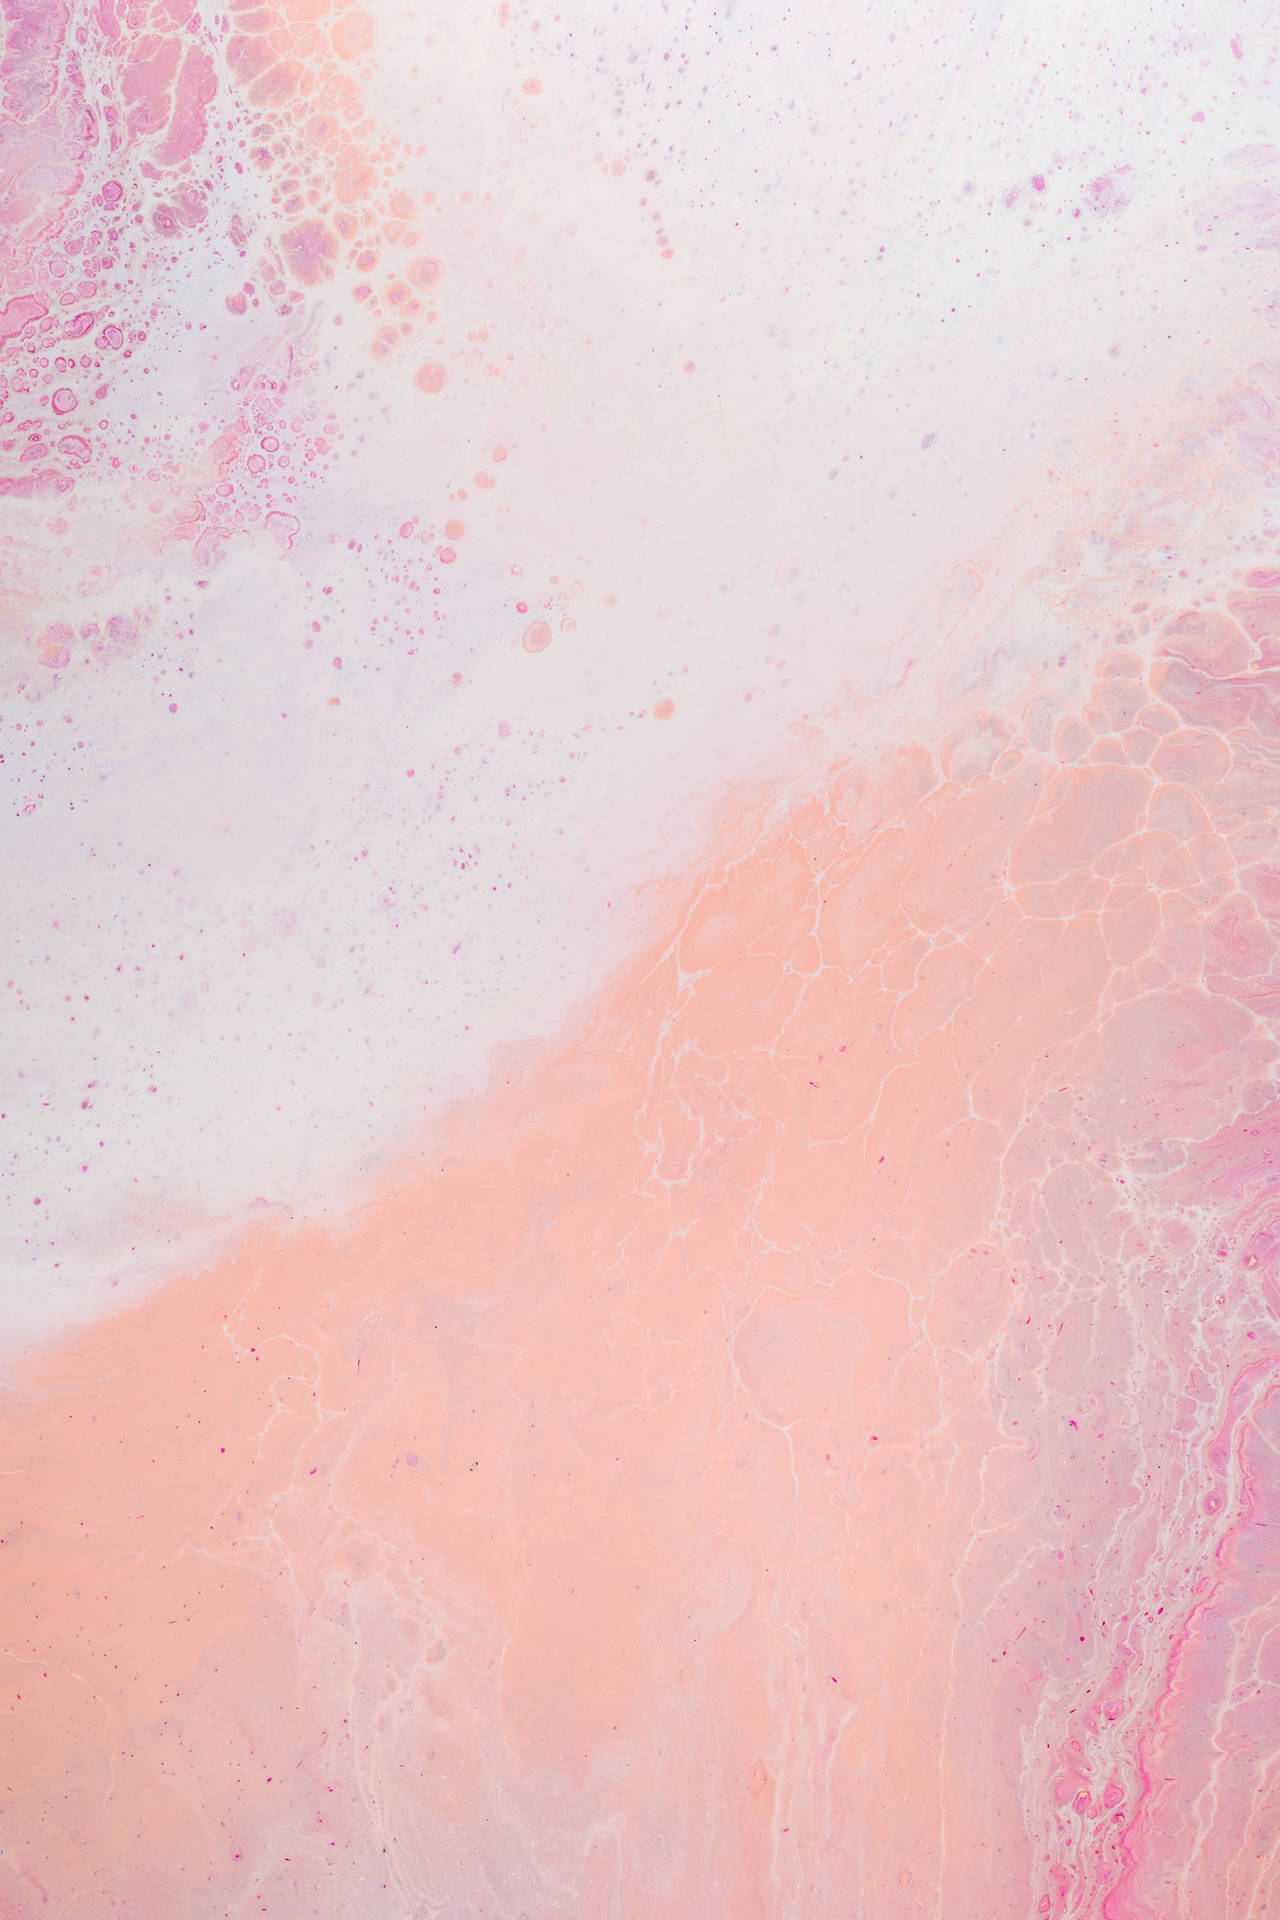 An Elegant Display Of Pastel Pink Blooms. Background